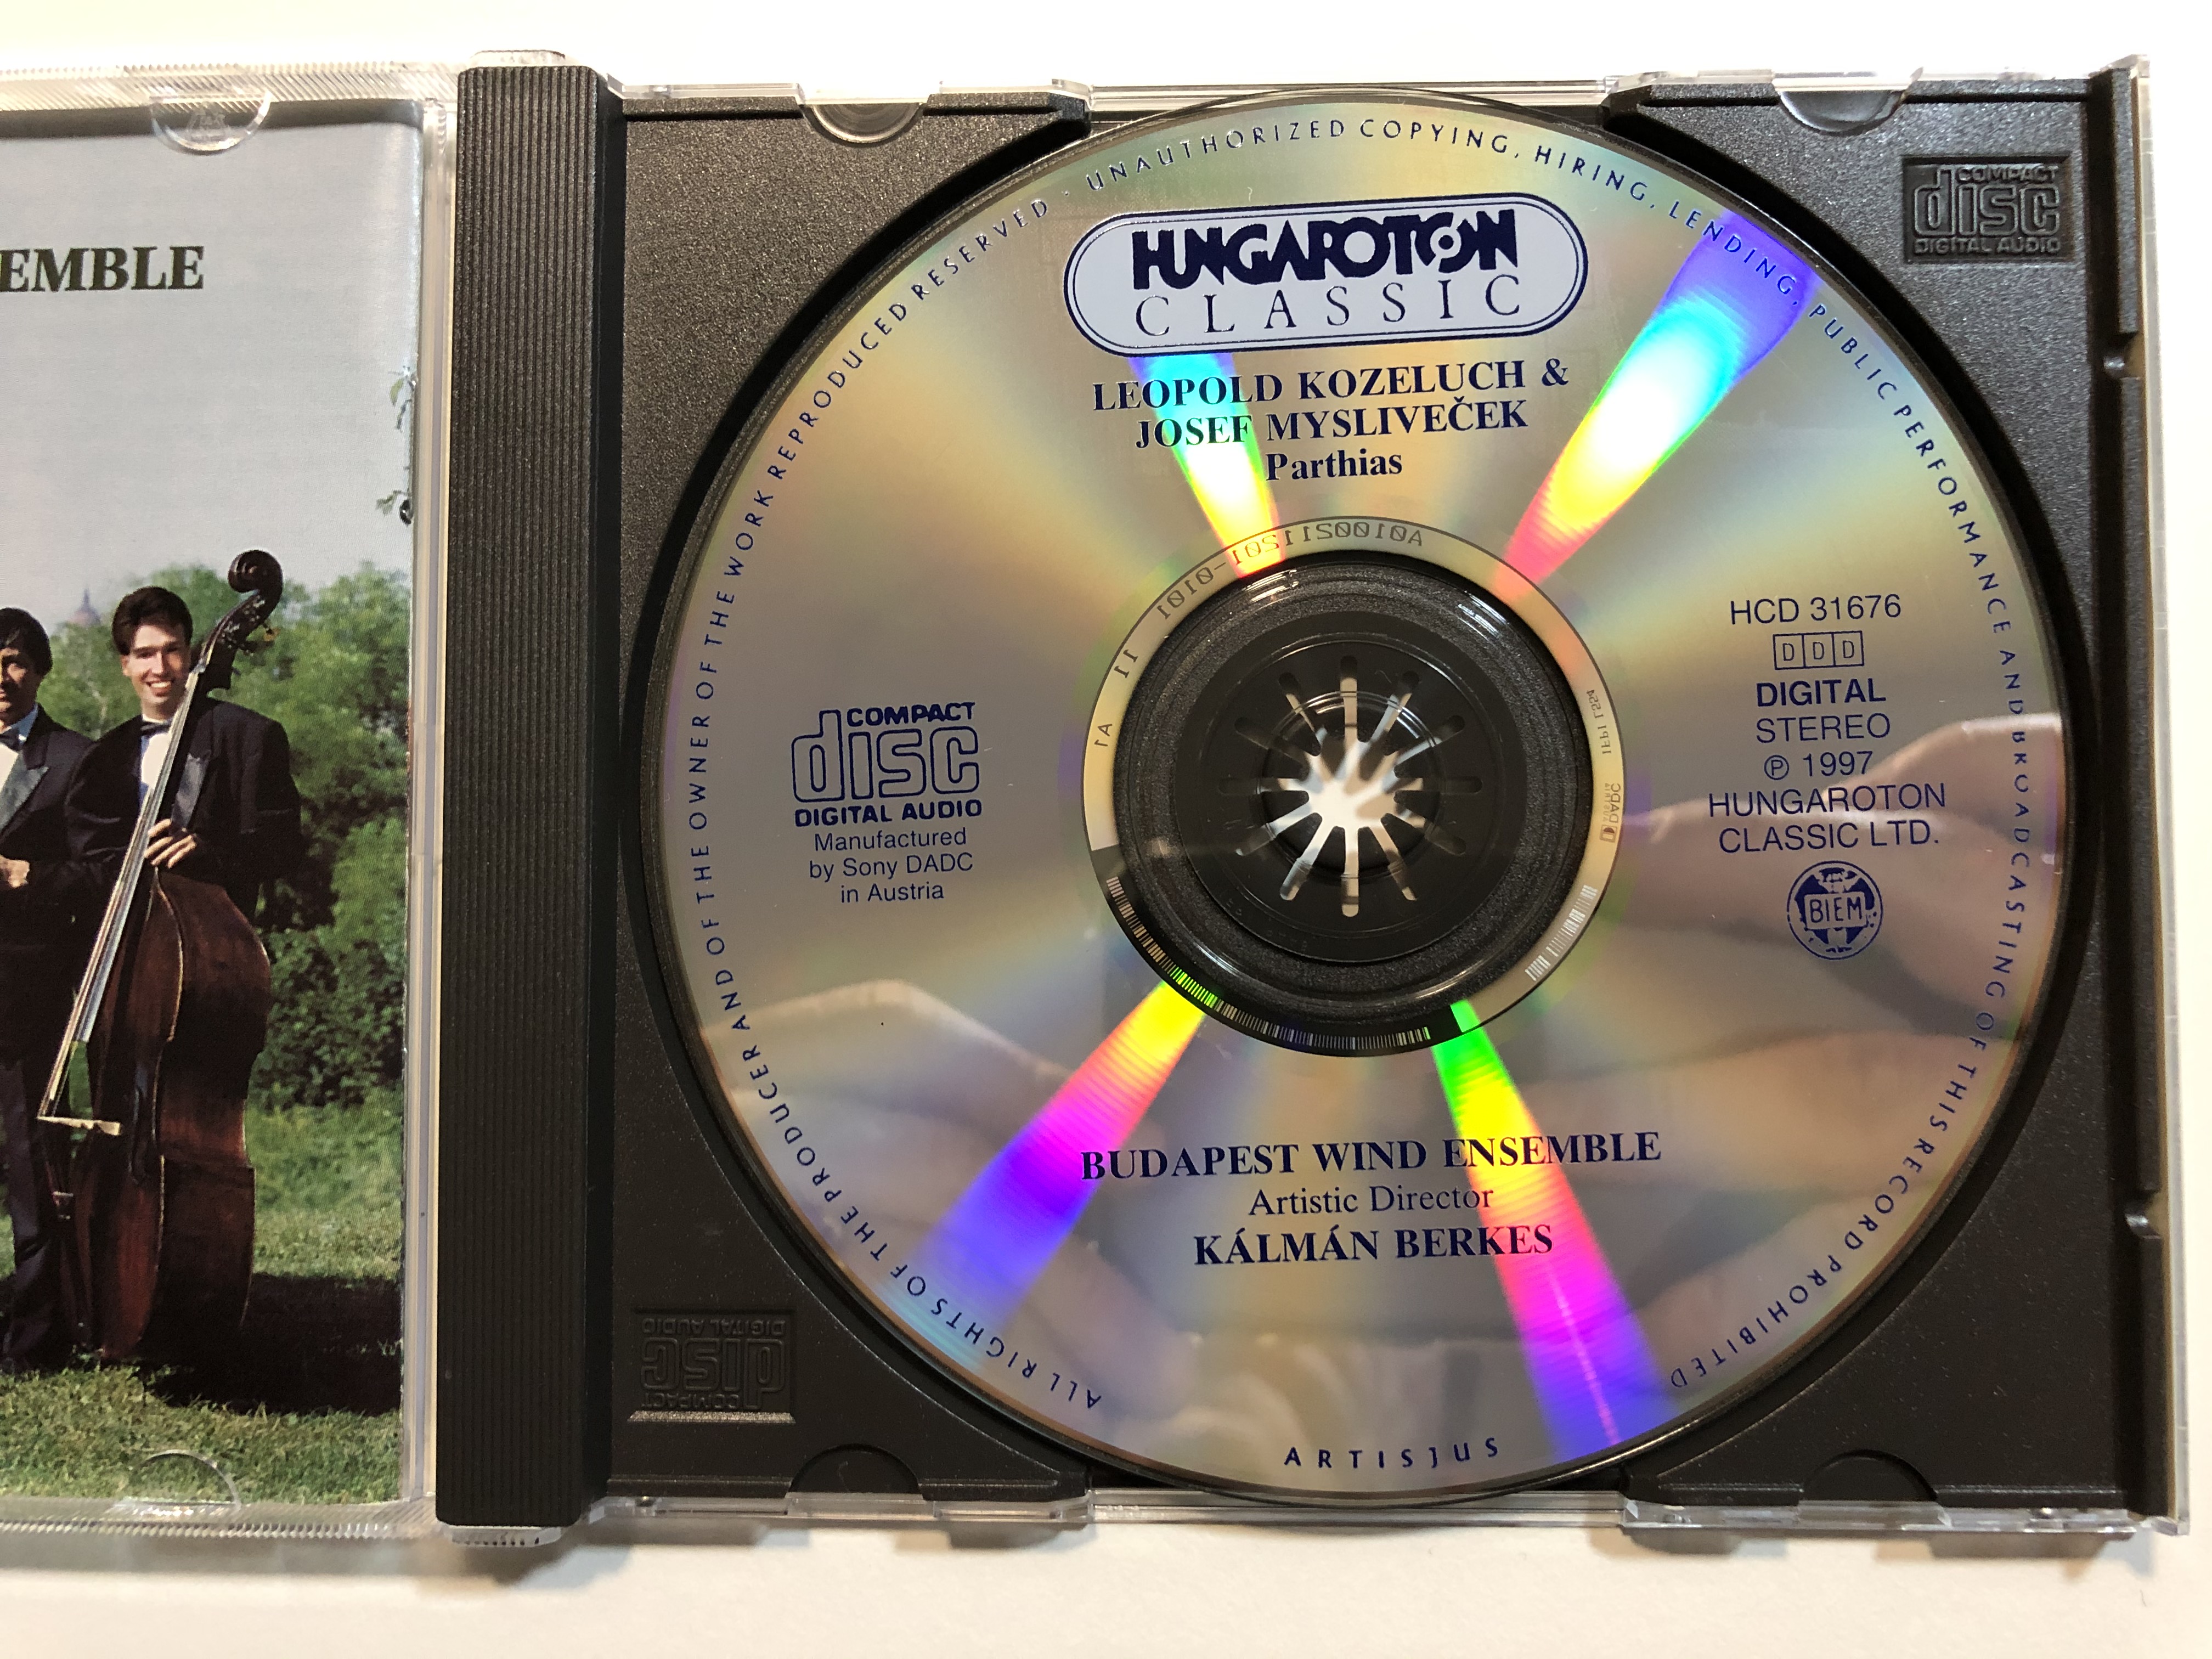 leopold-kozeluch-josef-myslive-ek-parthias-budapest-wind-ensemble-artistic-director-kalman-berkes-hungaroton-classic-audio-cd-1997-stereo-hcd-31676-7-.jpg